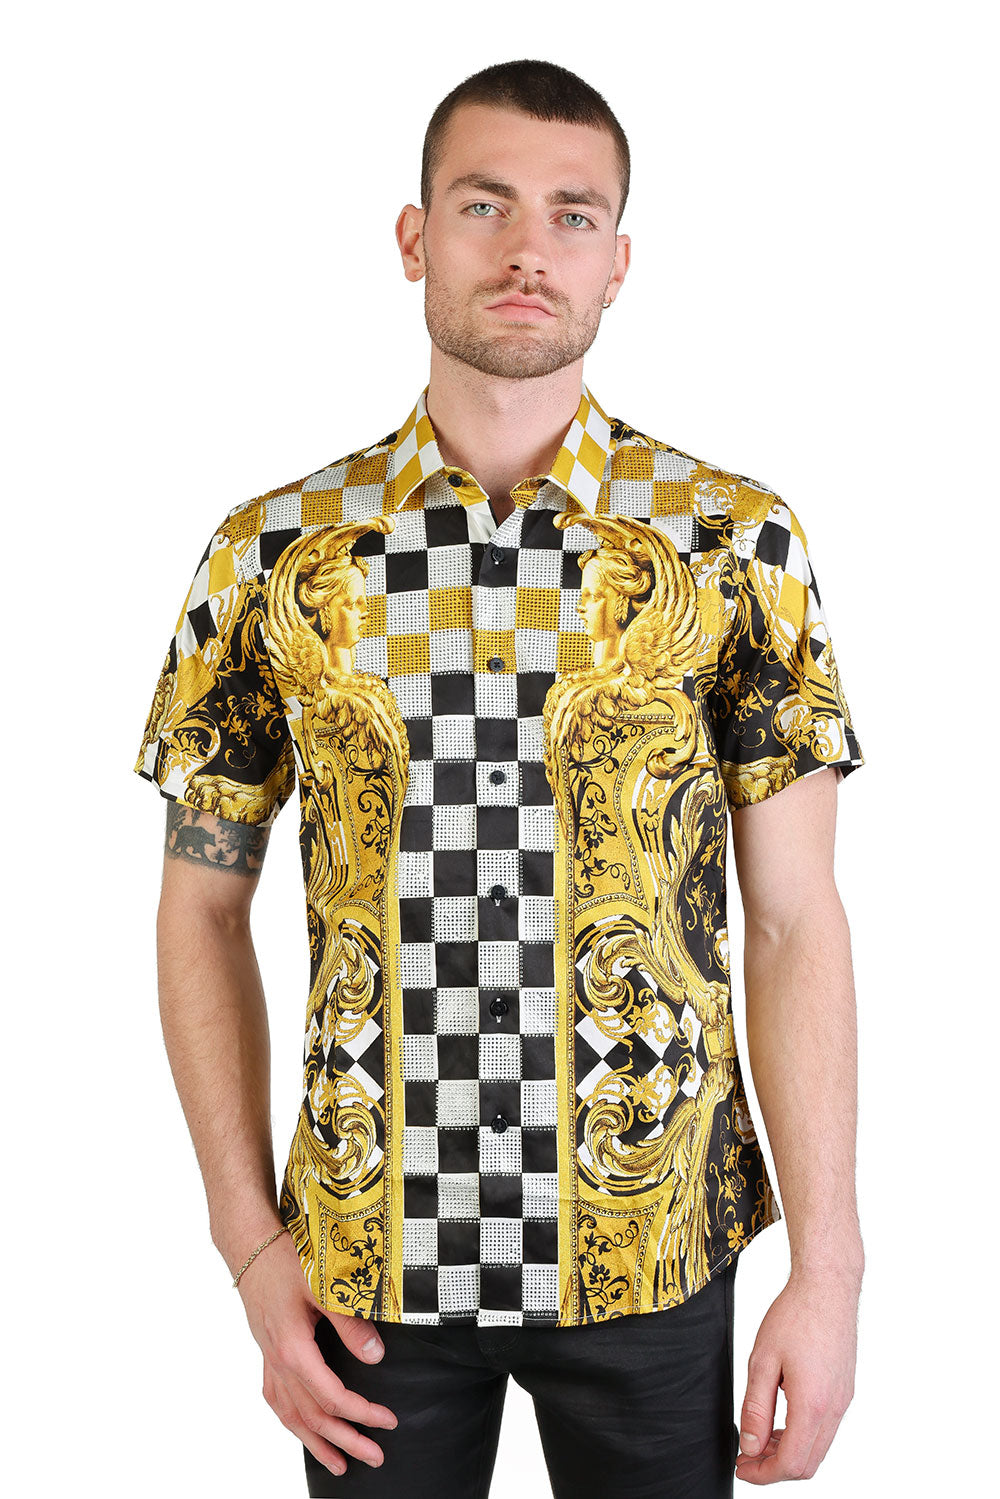 Barabas Men's Baroque Rhinestone Checkered Short Sleeve Shirts SSR20 gold black 